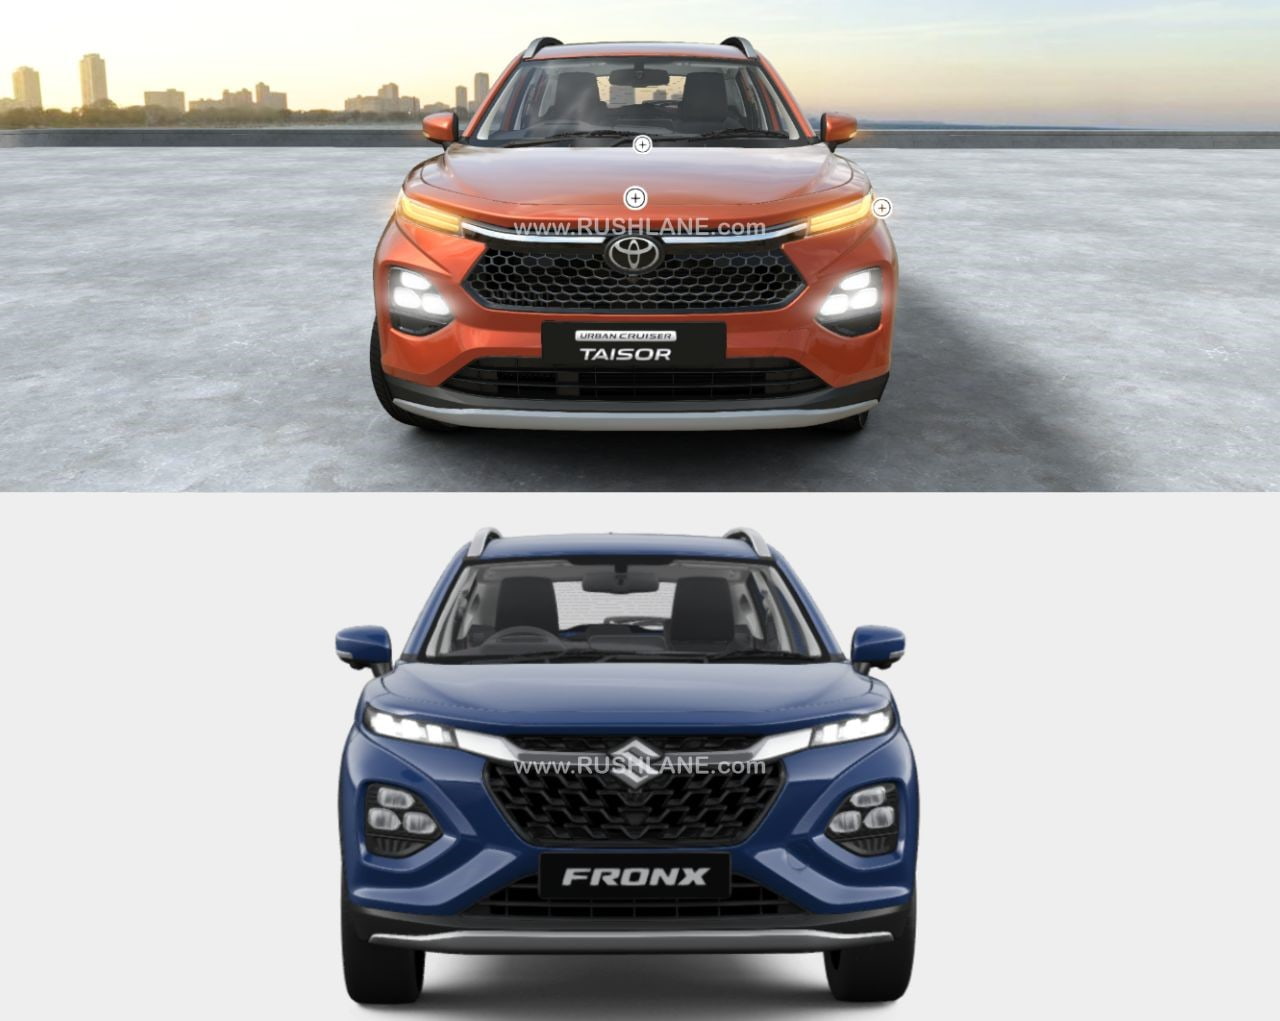 Toyota Taisor vs Maruti Fronx - Fascia